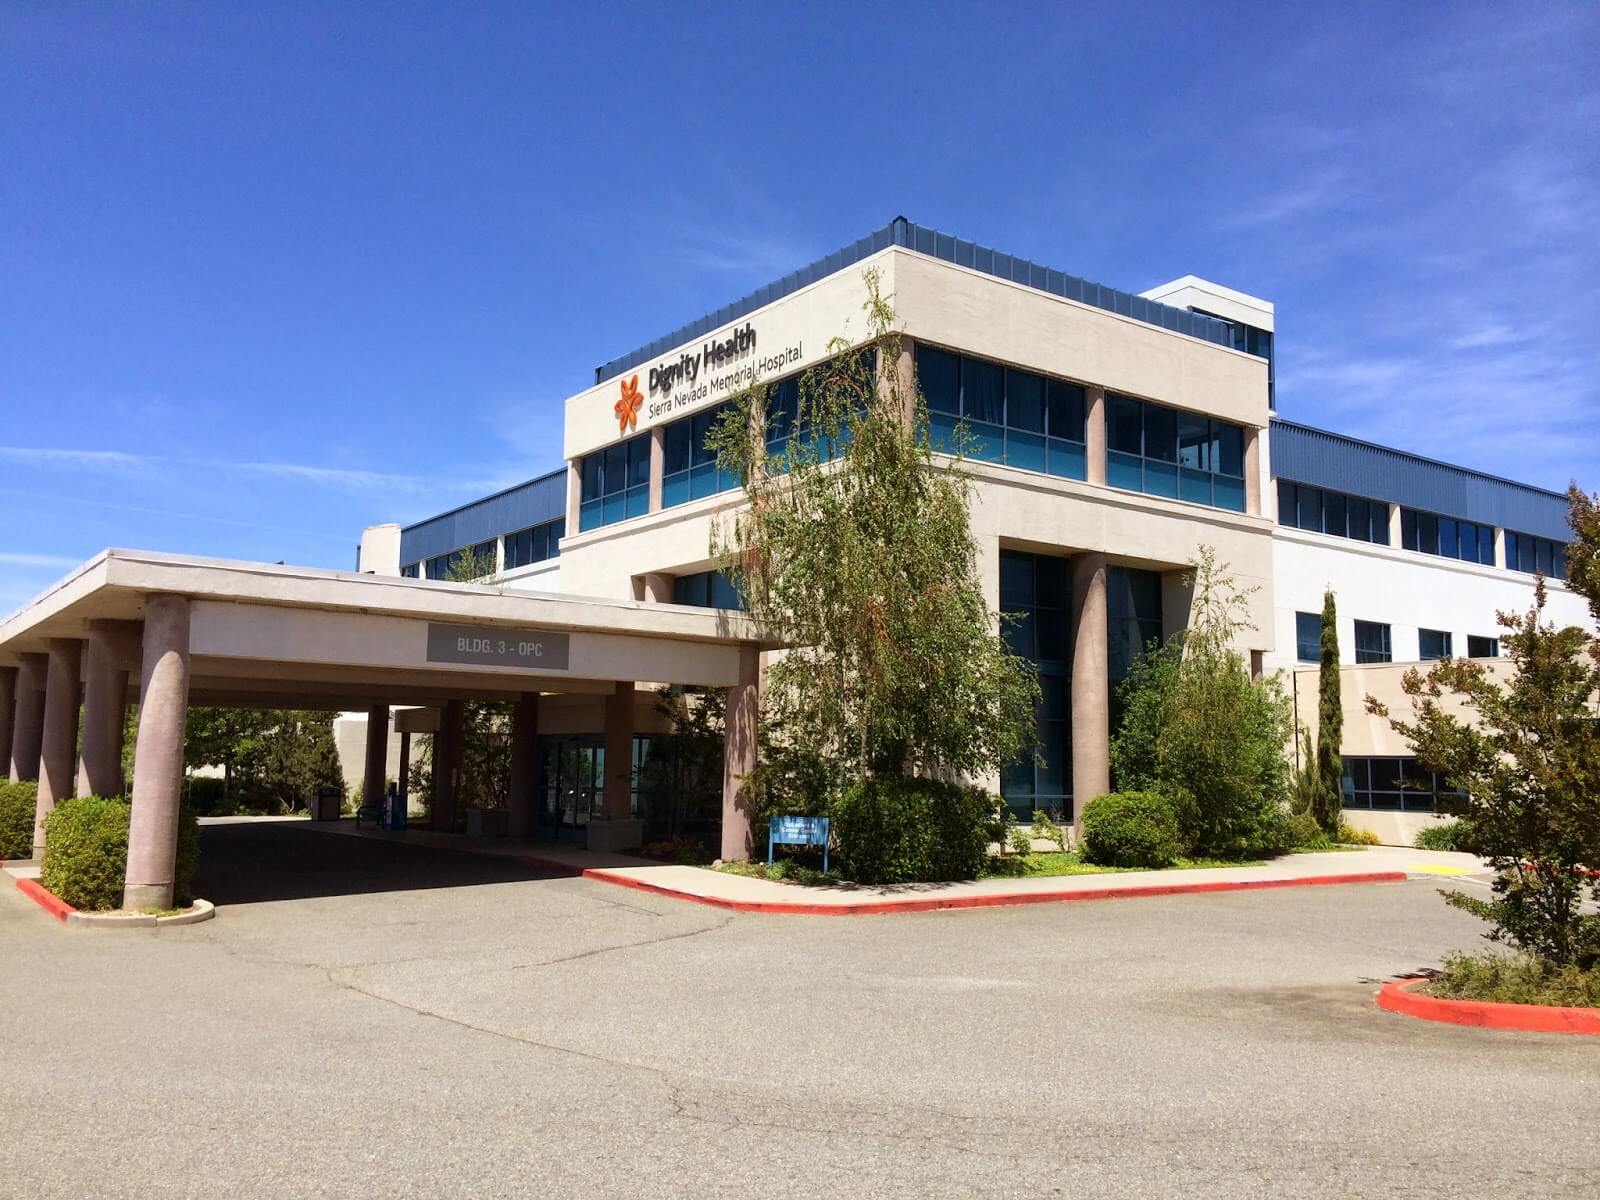 Sierra Nevada Memorial Hospital